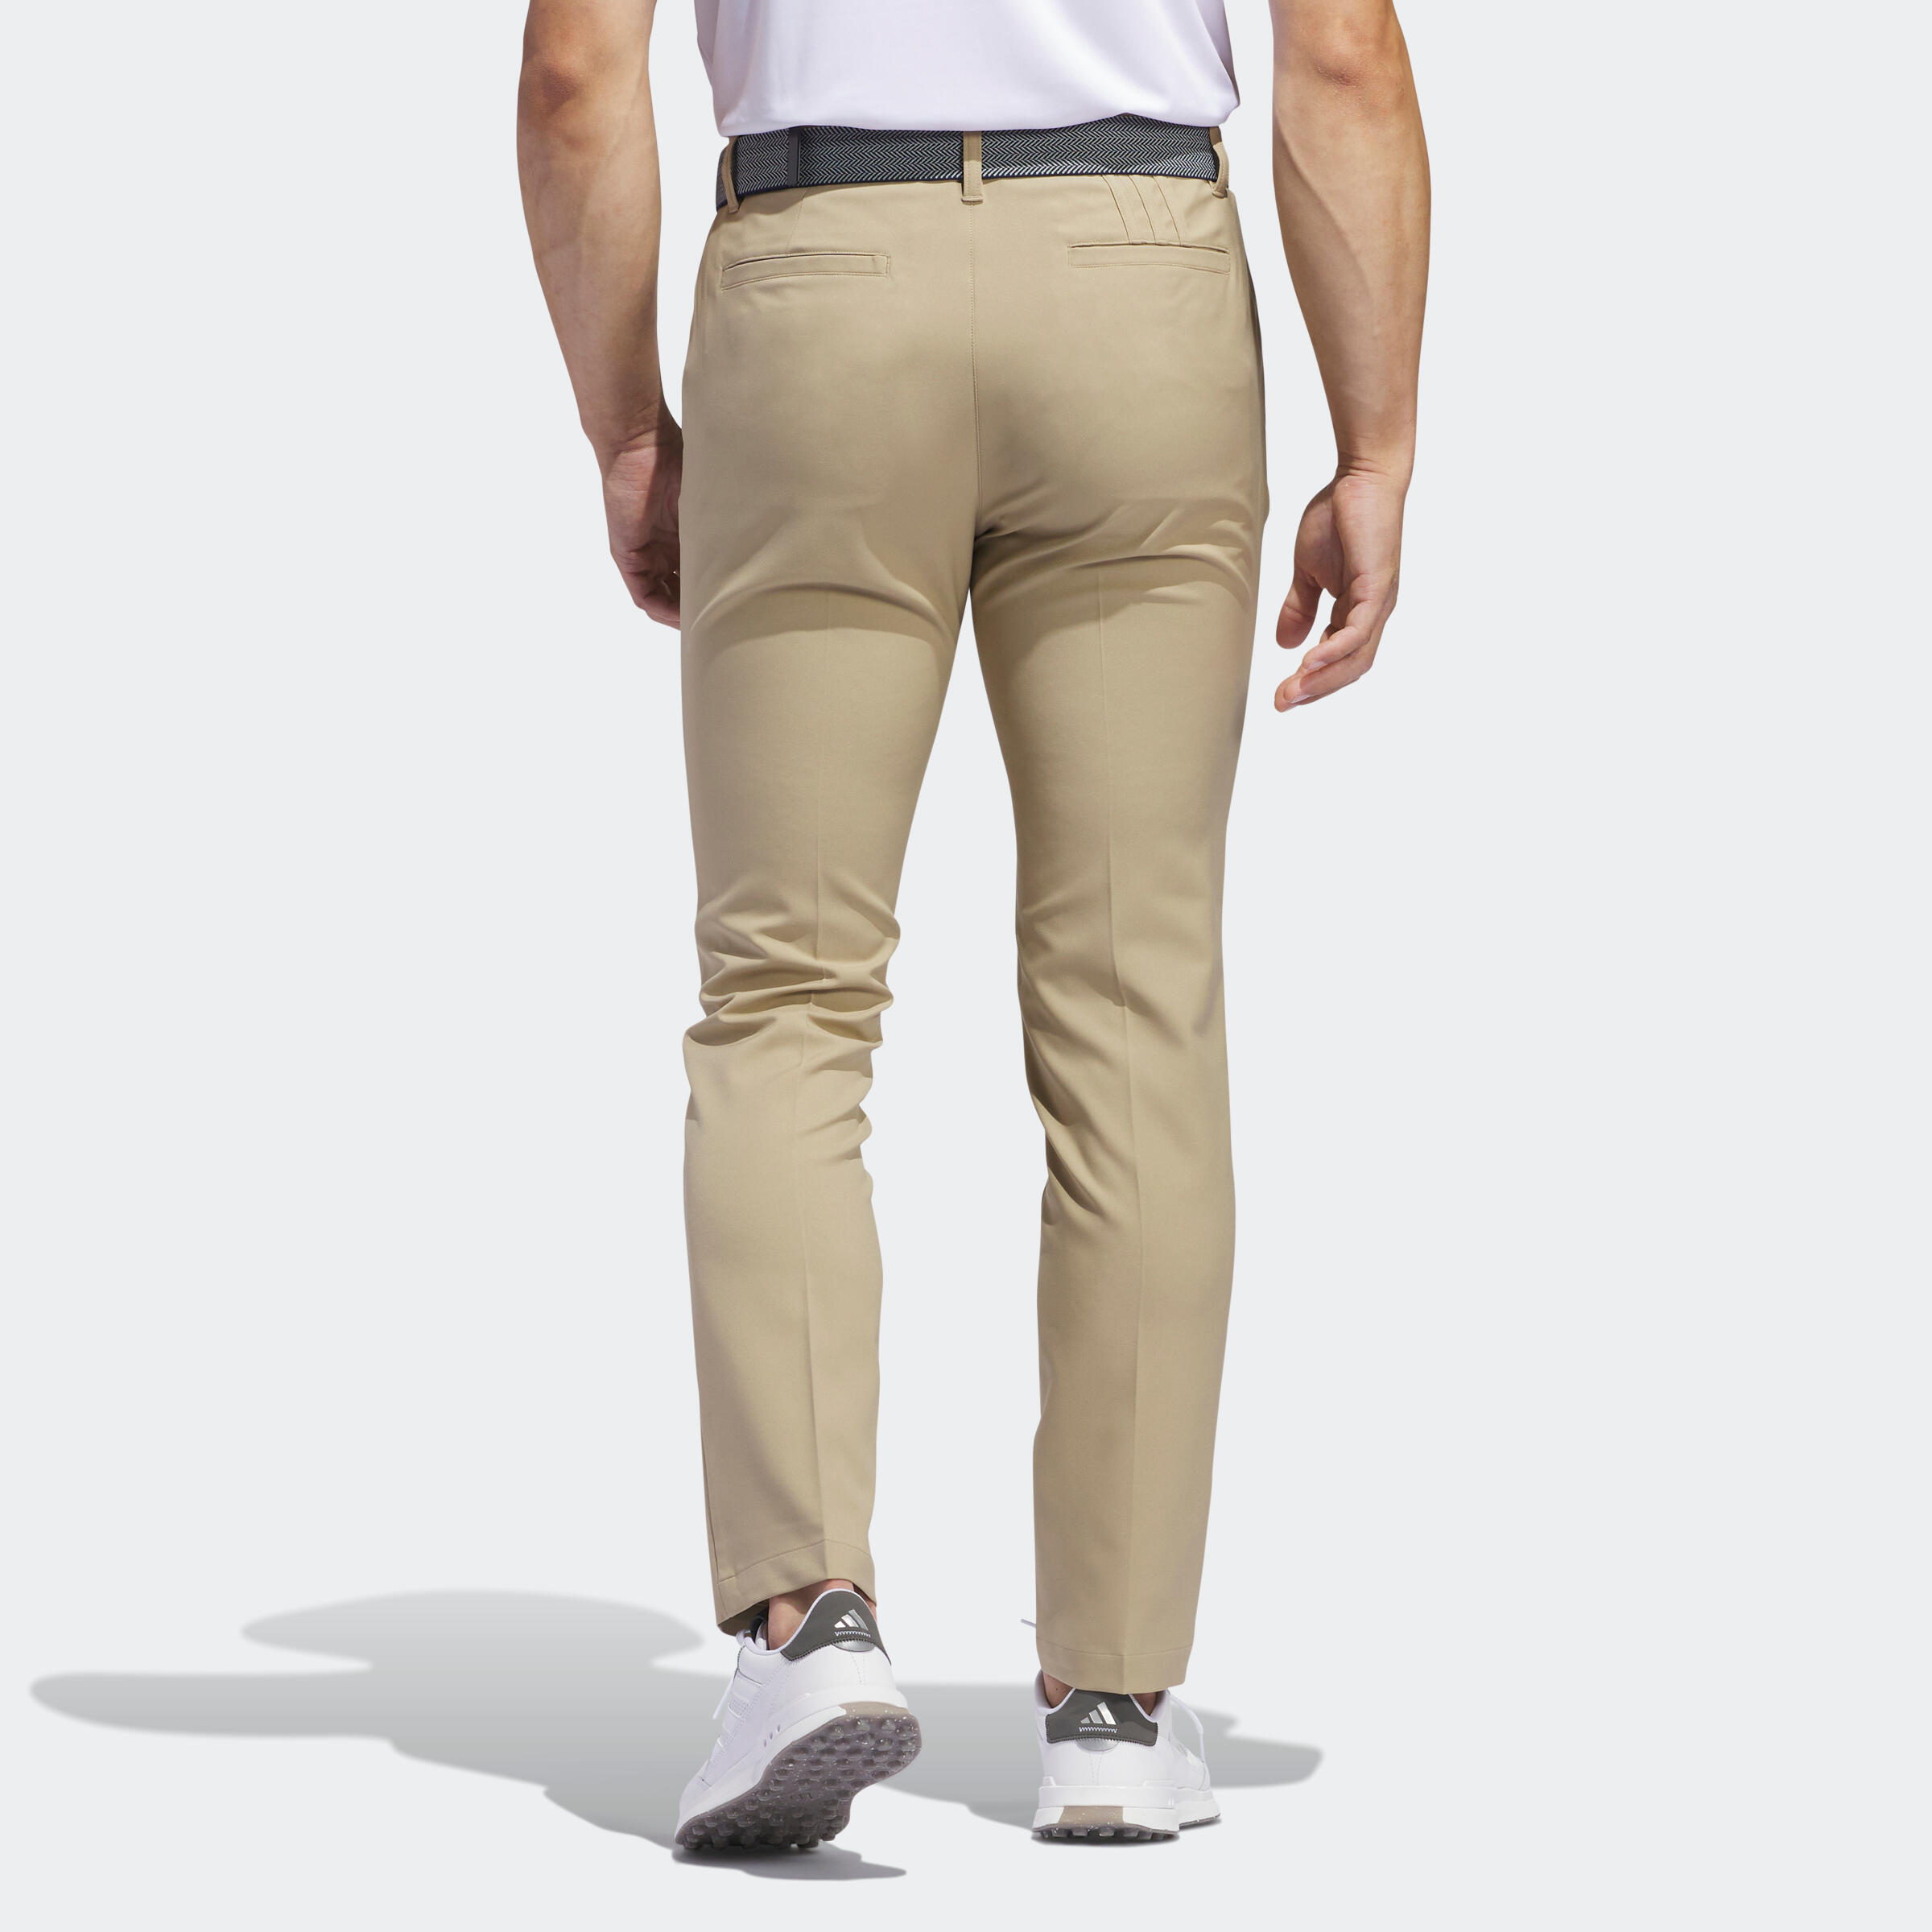 Men's golf trousers - Adidas beige 2/4